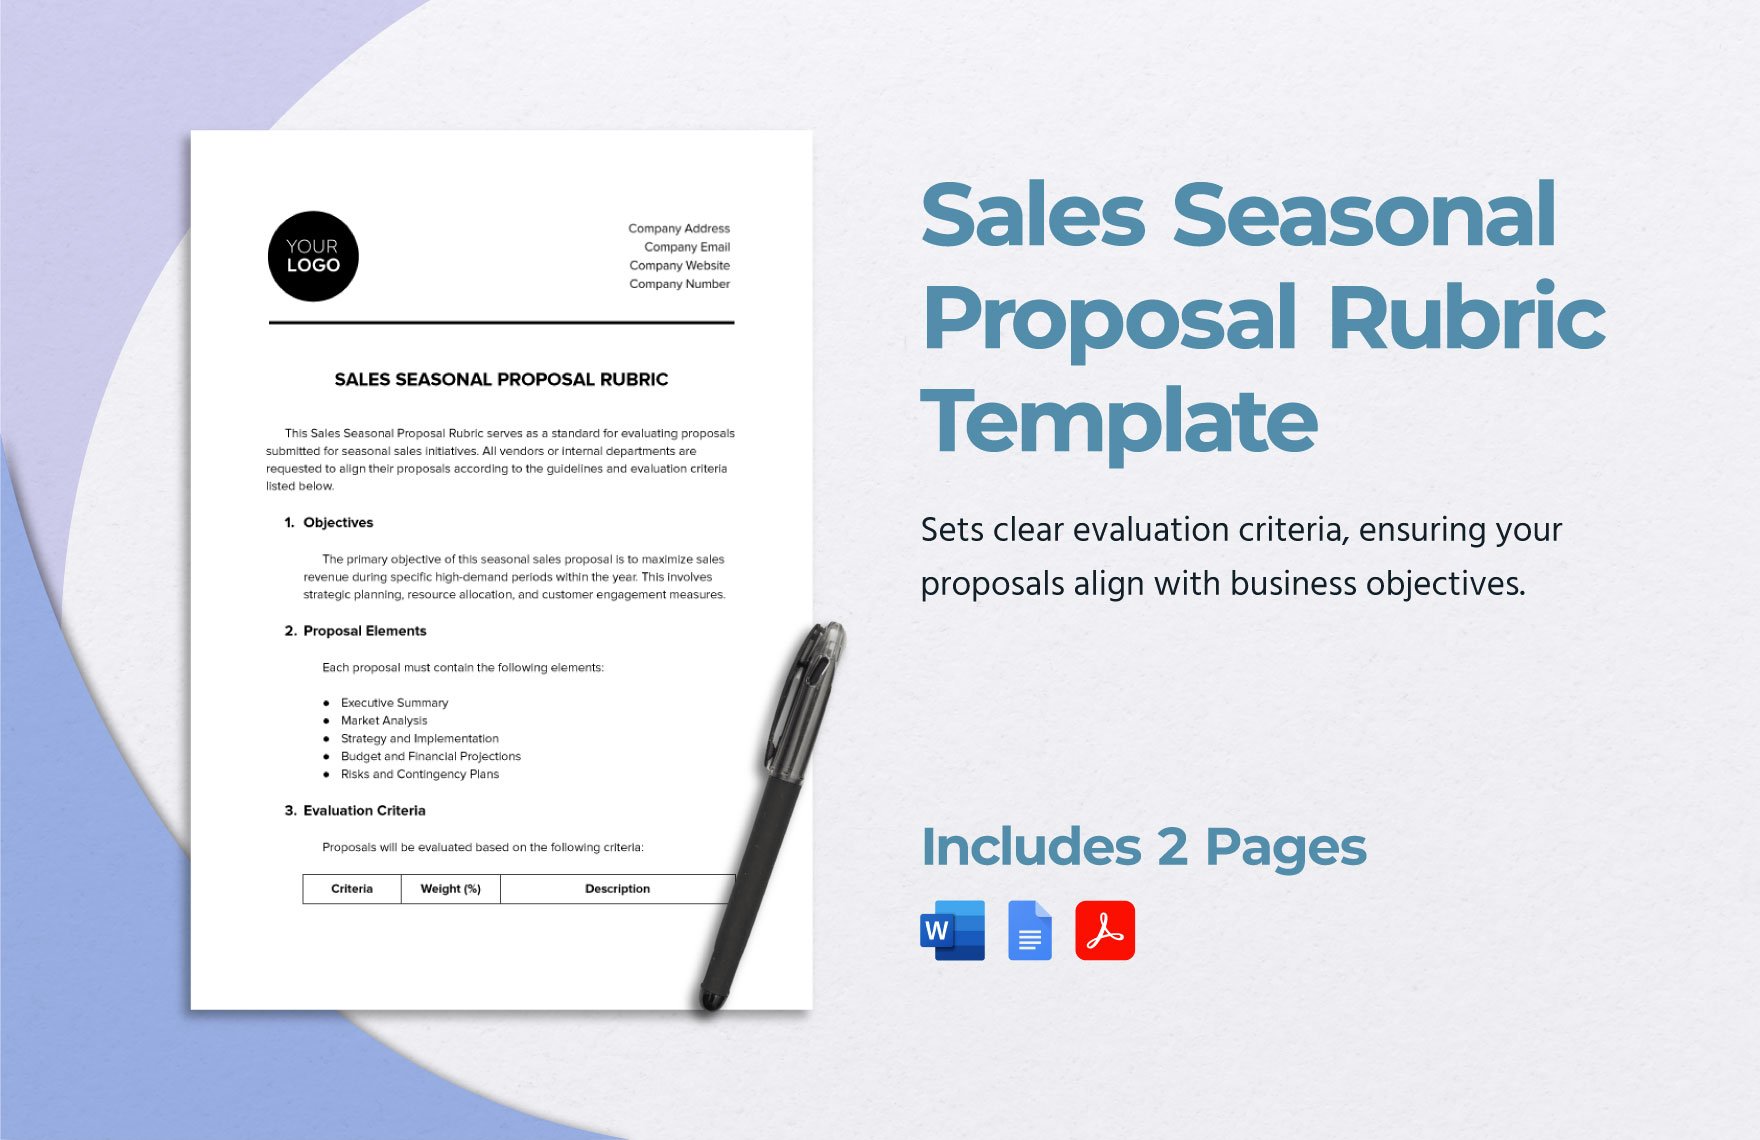 Sales Seasonal Proposal Rubric Template in Word, Google Docs, PDF